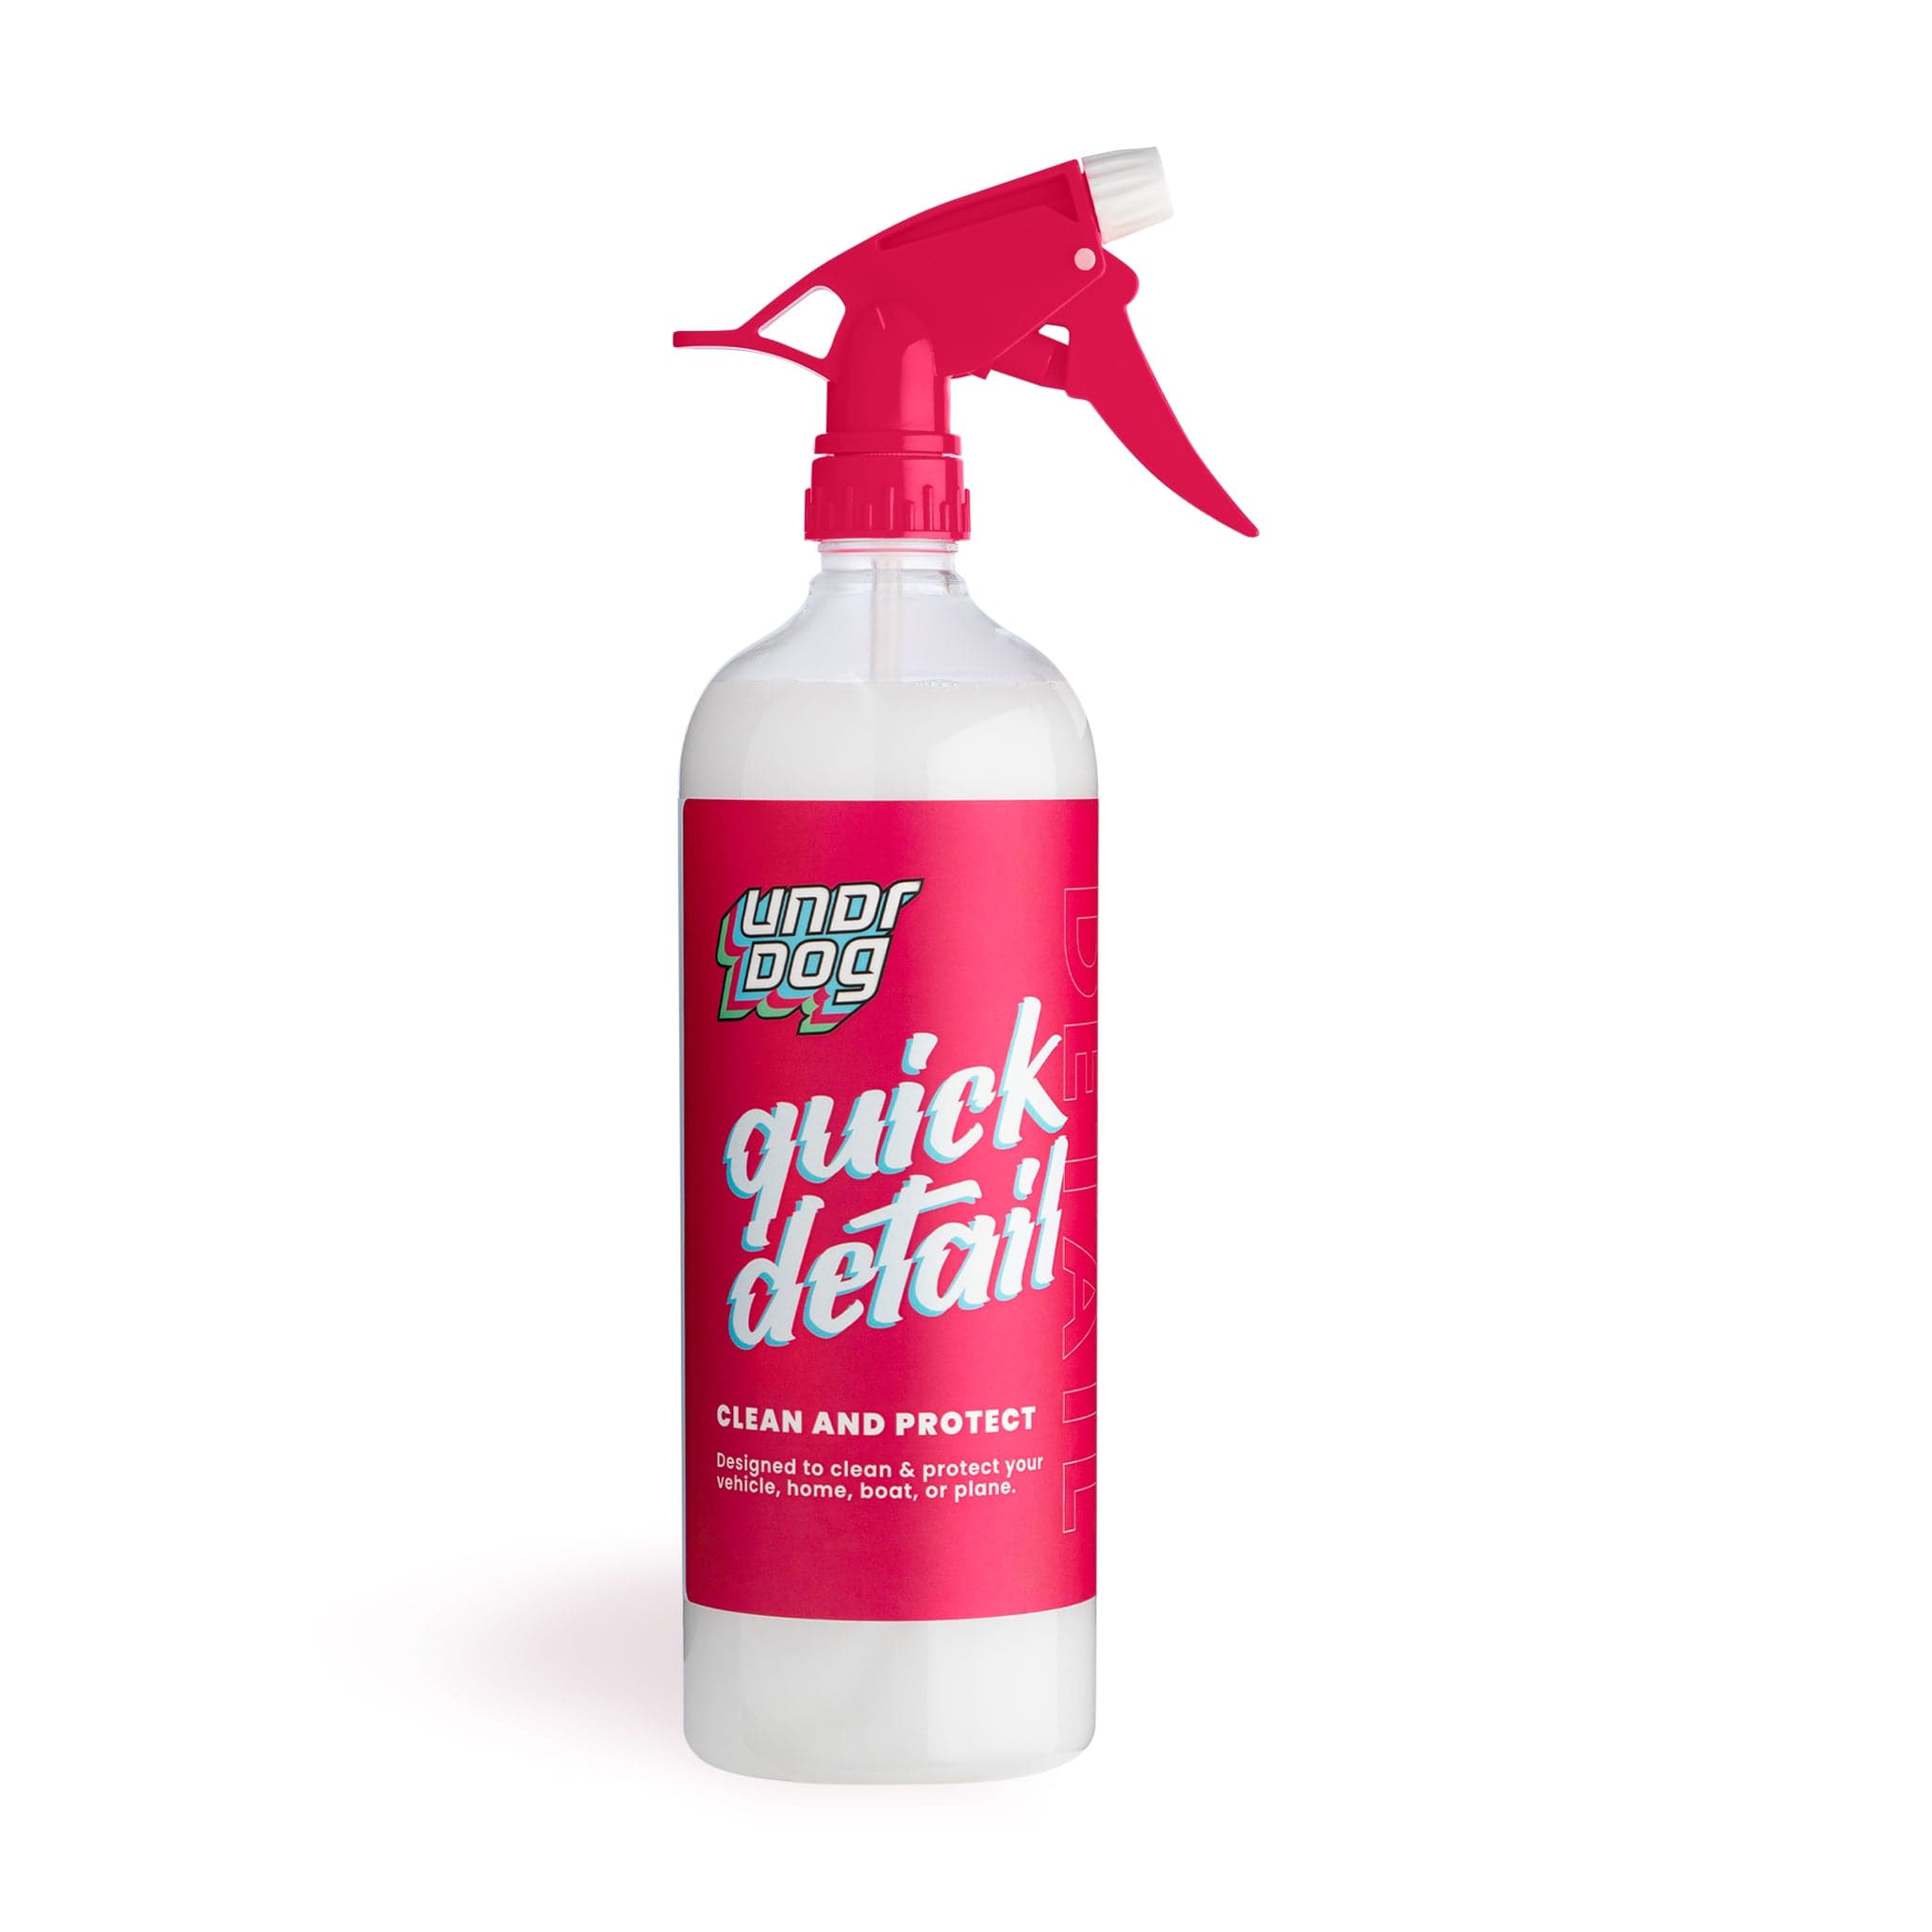 Buy Adam's Detail Spray 5 Gallon - Quick Waterless Detailer Spray